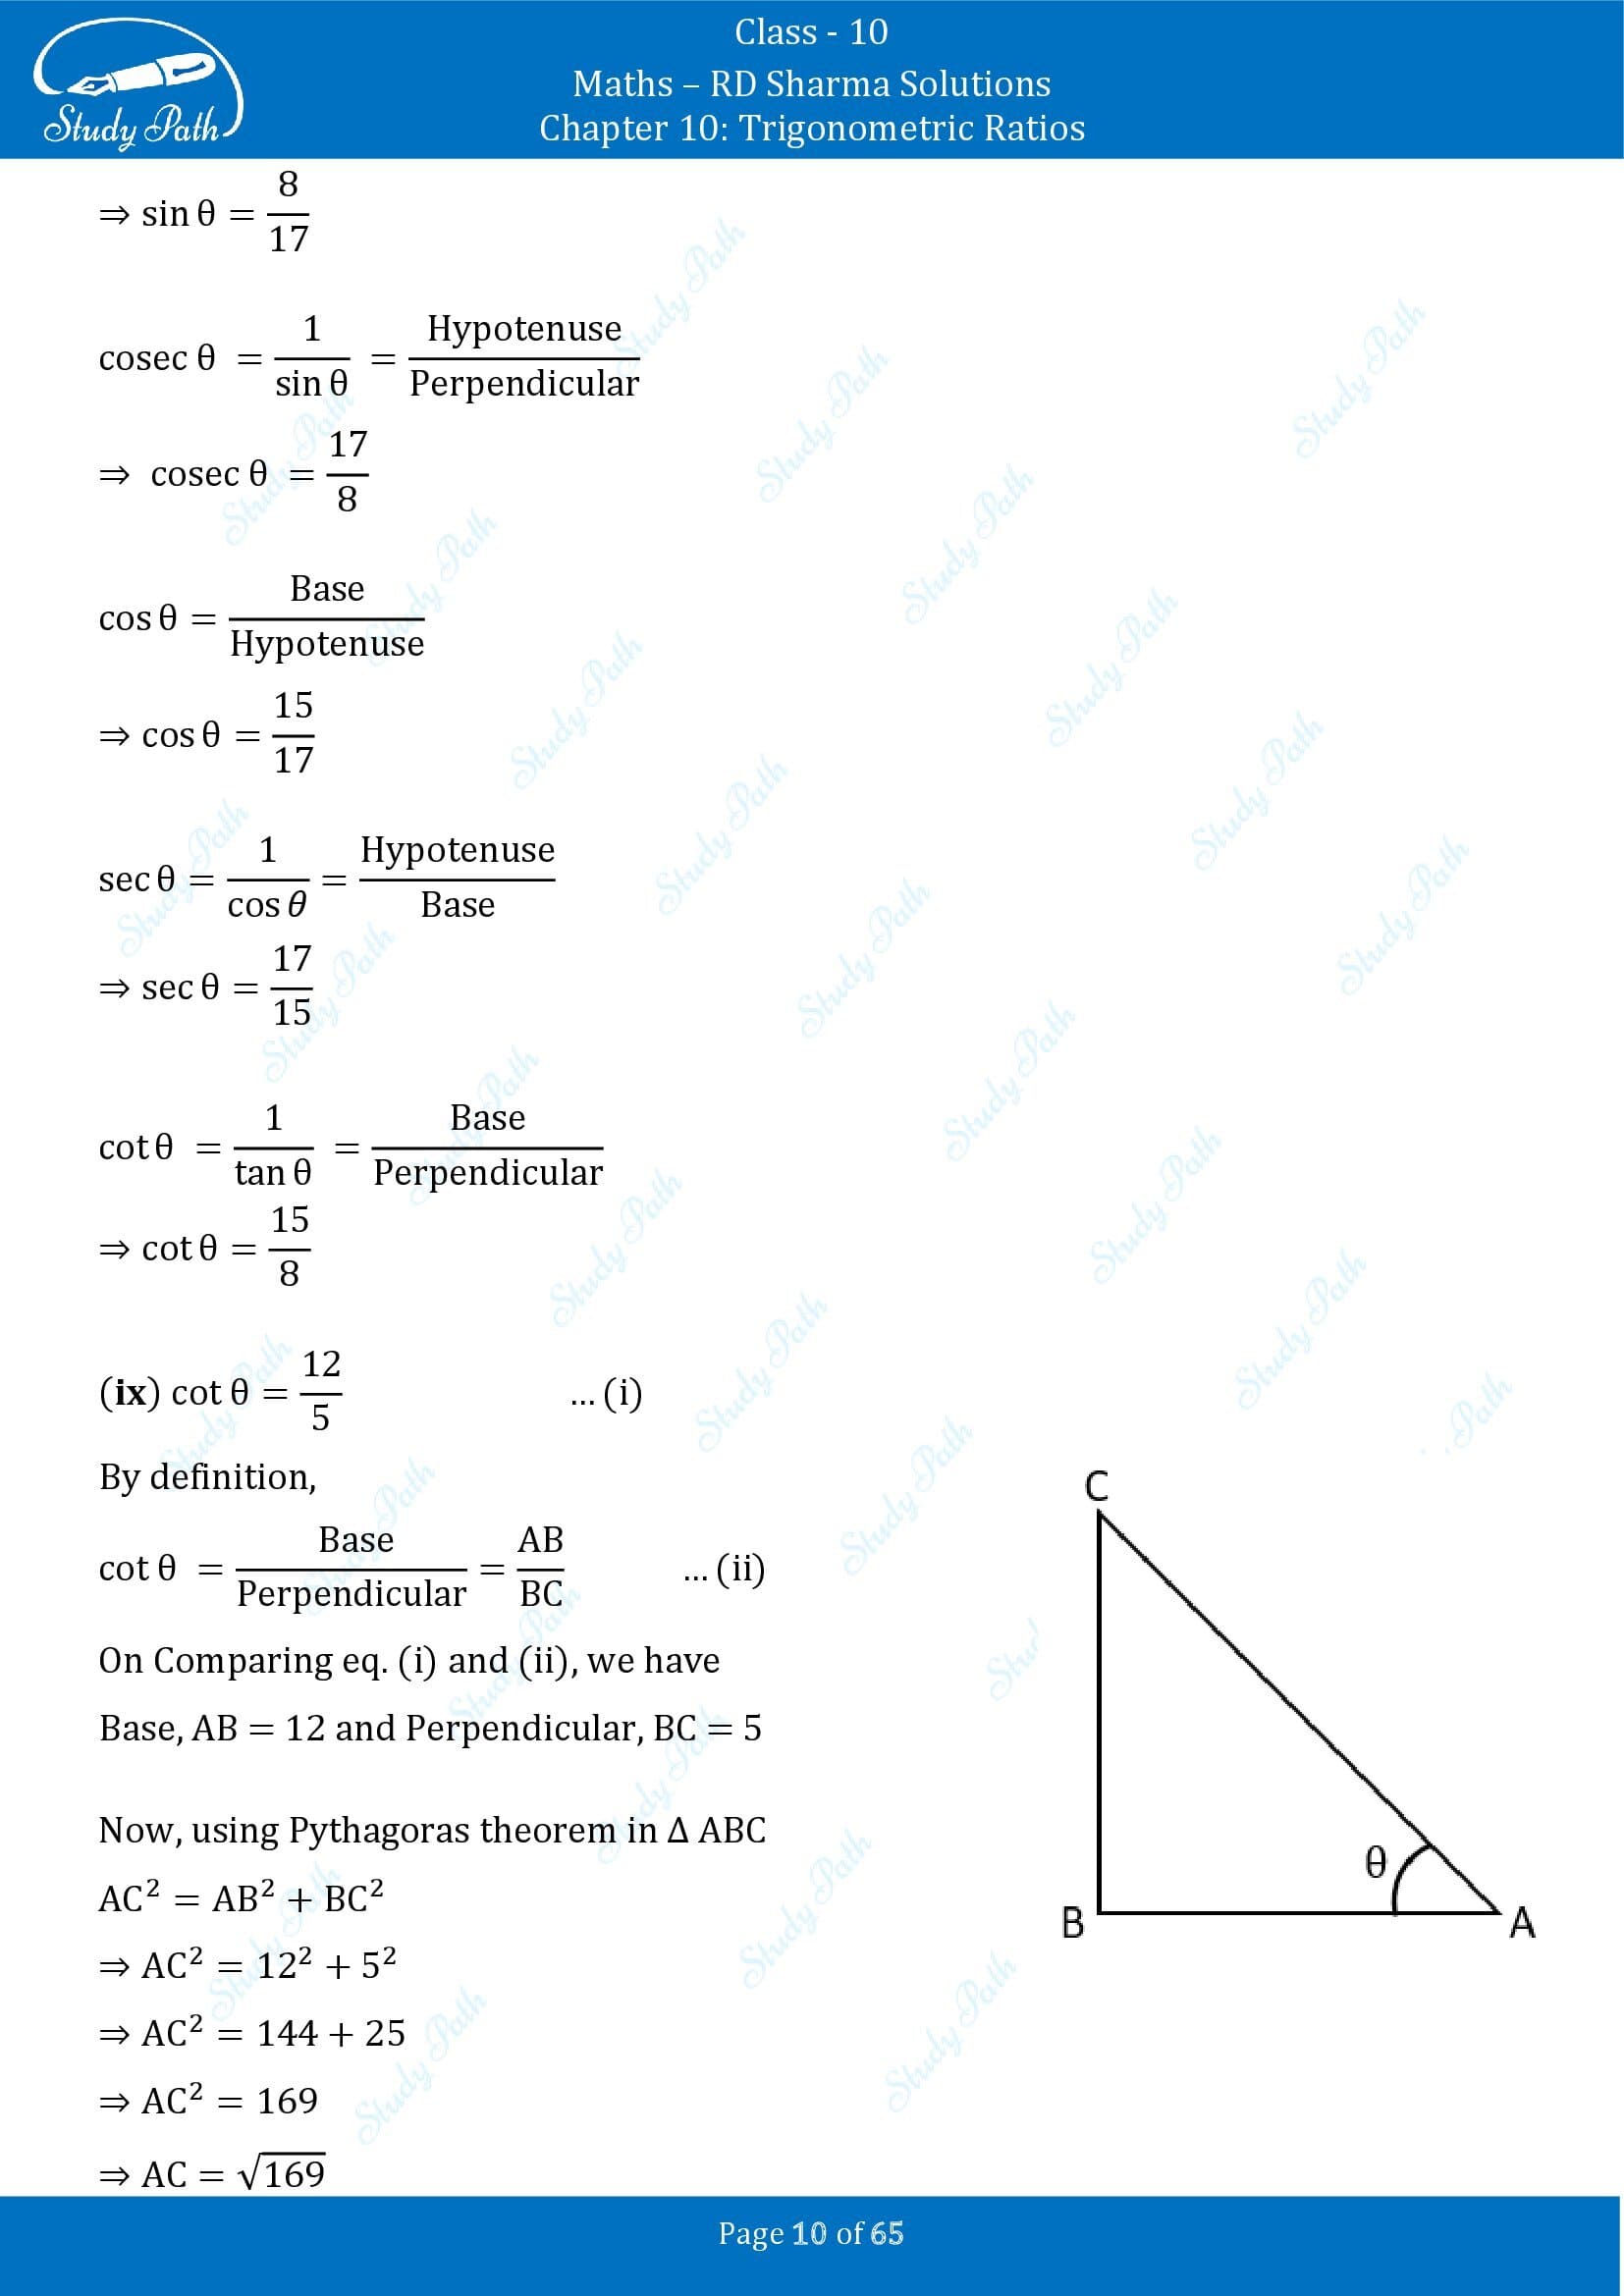 RD Sharma Solutions Class 10 Chapter 10 Trigonometric Ratios Exercise 10.1 00010